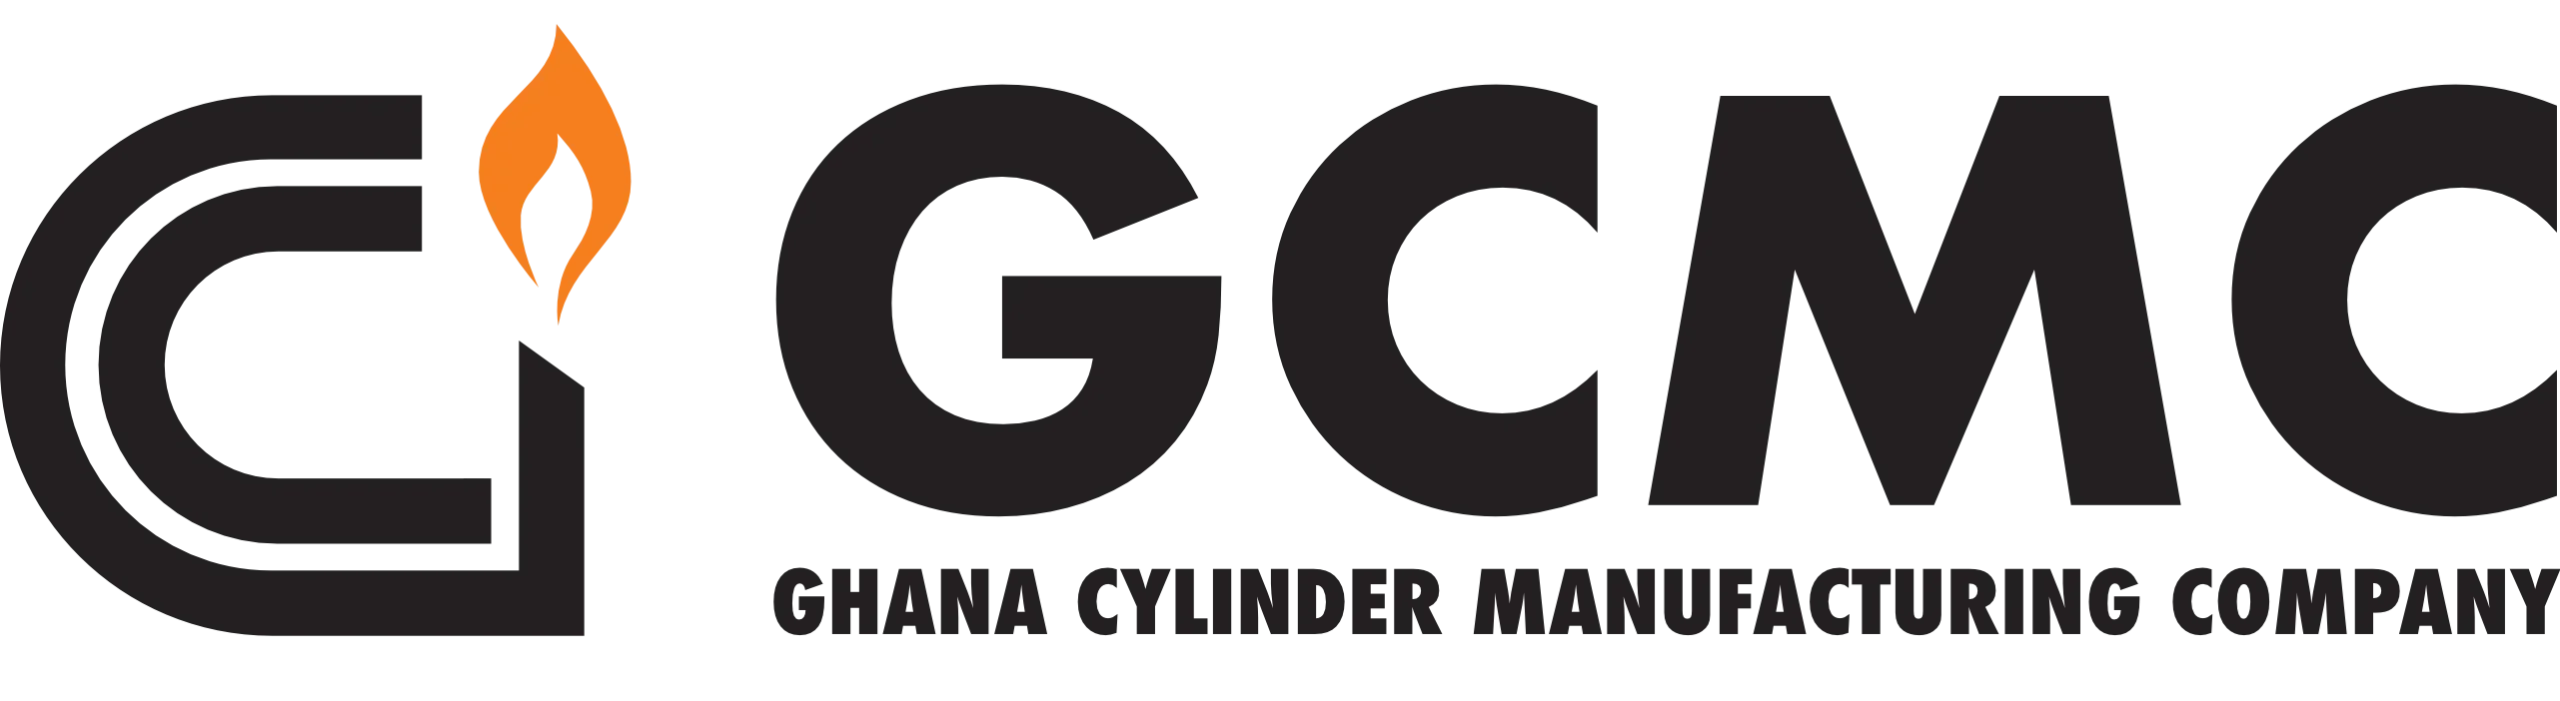 Ghana Cylinder Manufacturing Company